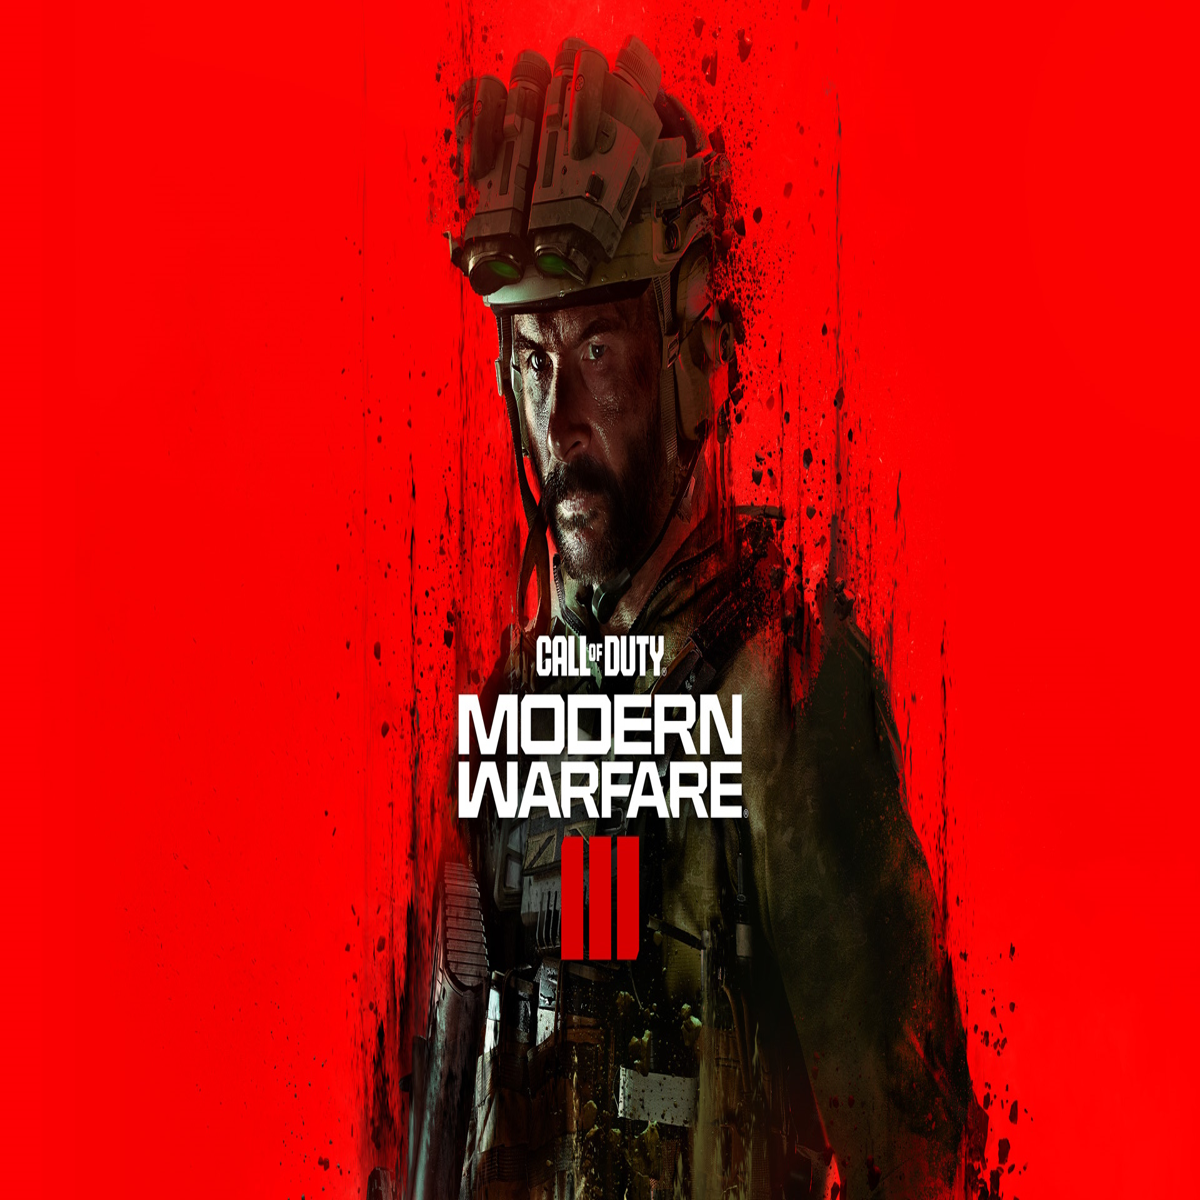 Modern Warfare 3 Campaign early access time: when does it unlock?